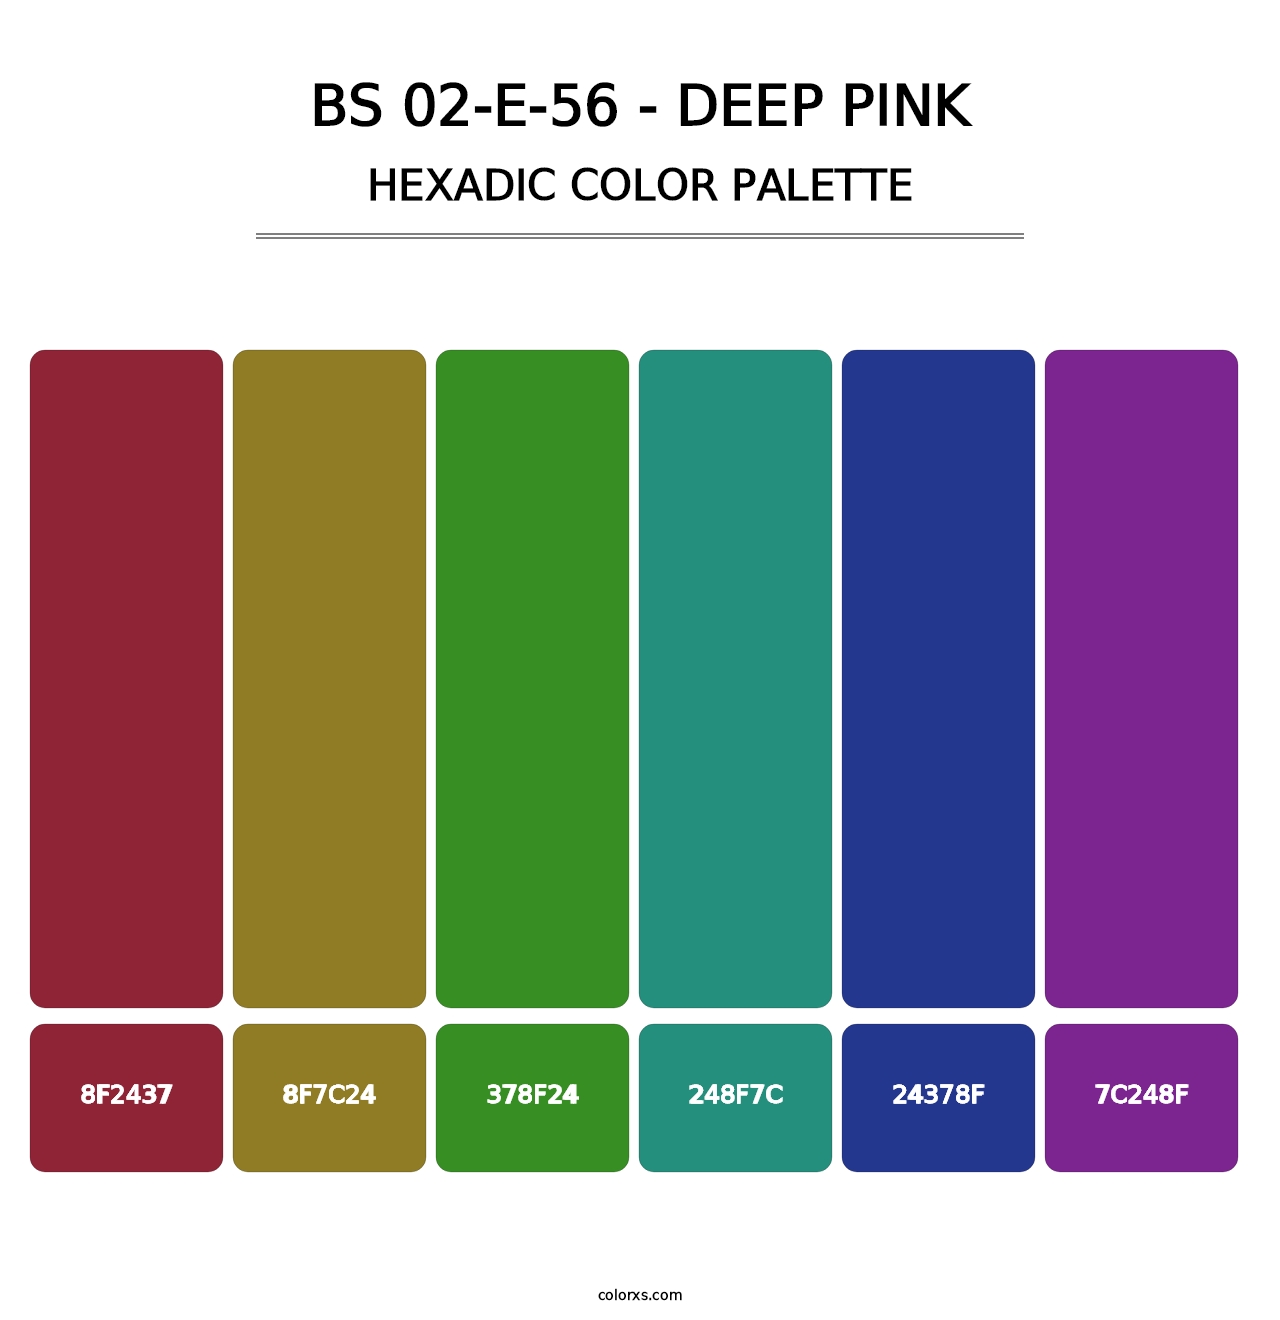 BS 02-E-56 - Deep Pink - Hexadic Color Palette